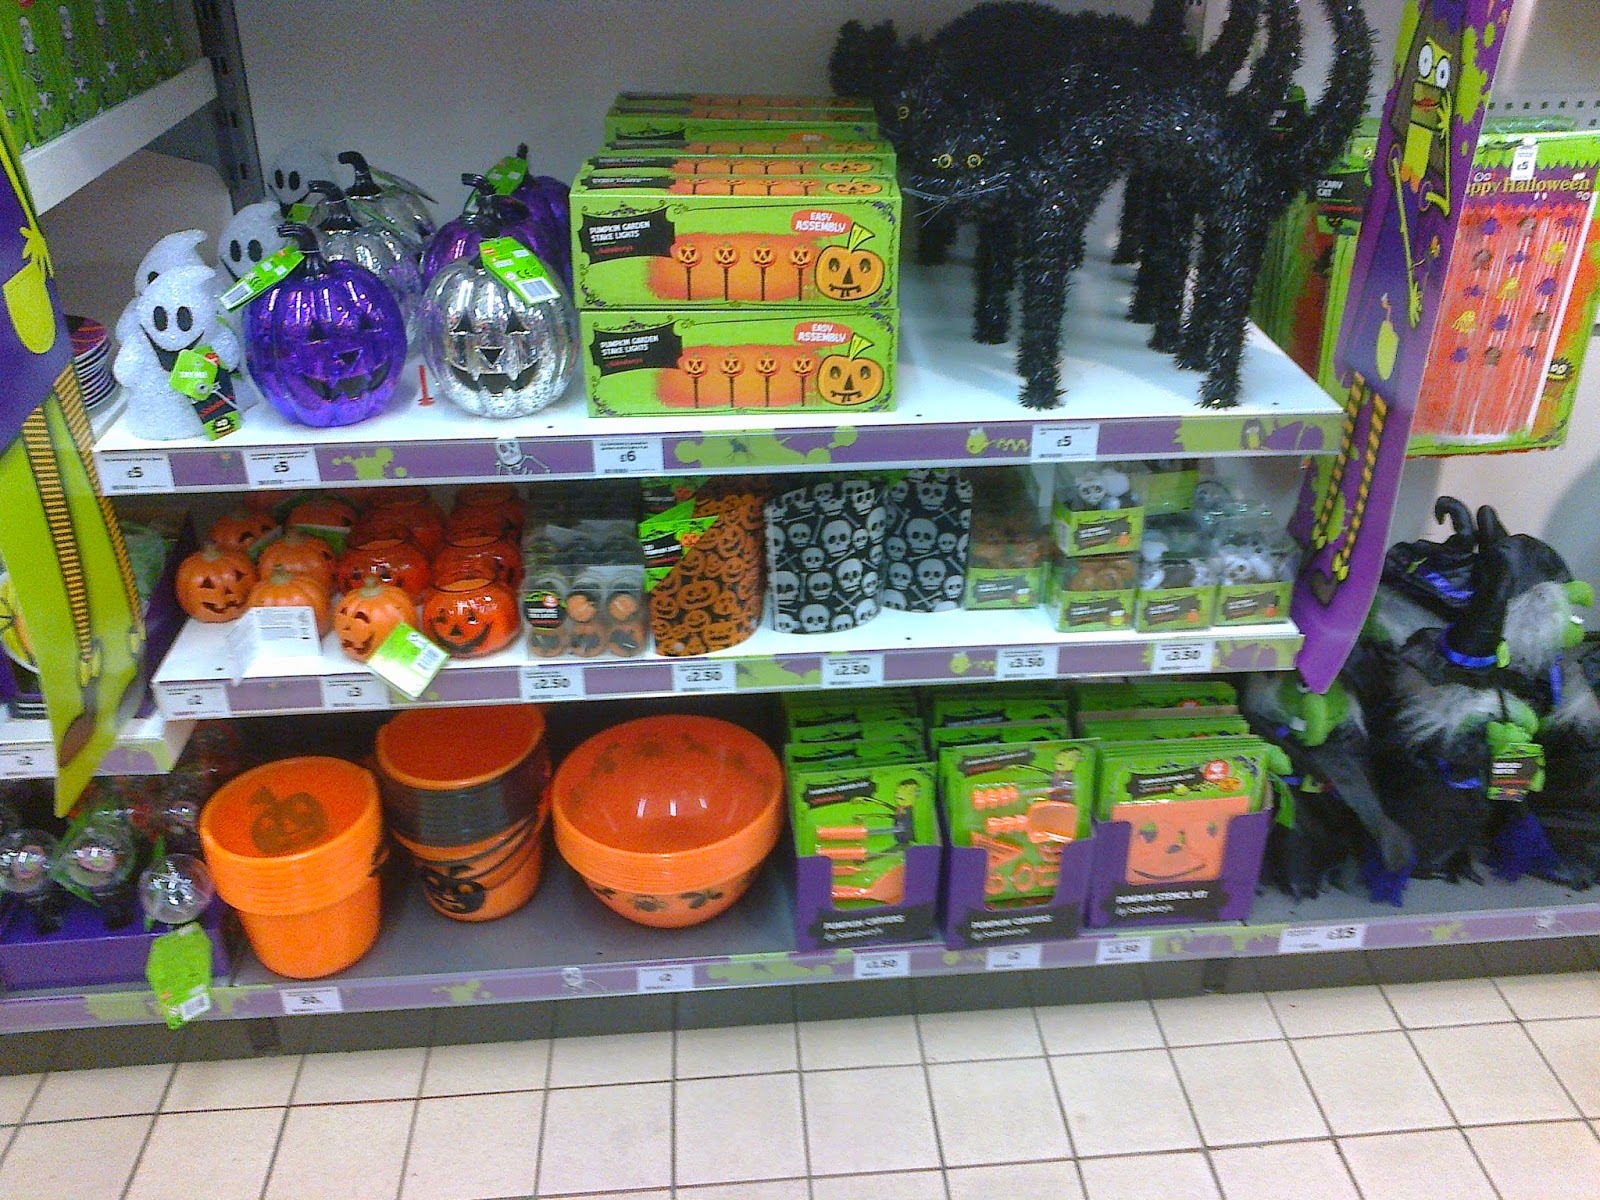 Halloween Vinces dark delights Sainsburys possibly underwhelms at 